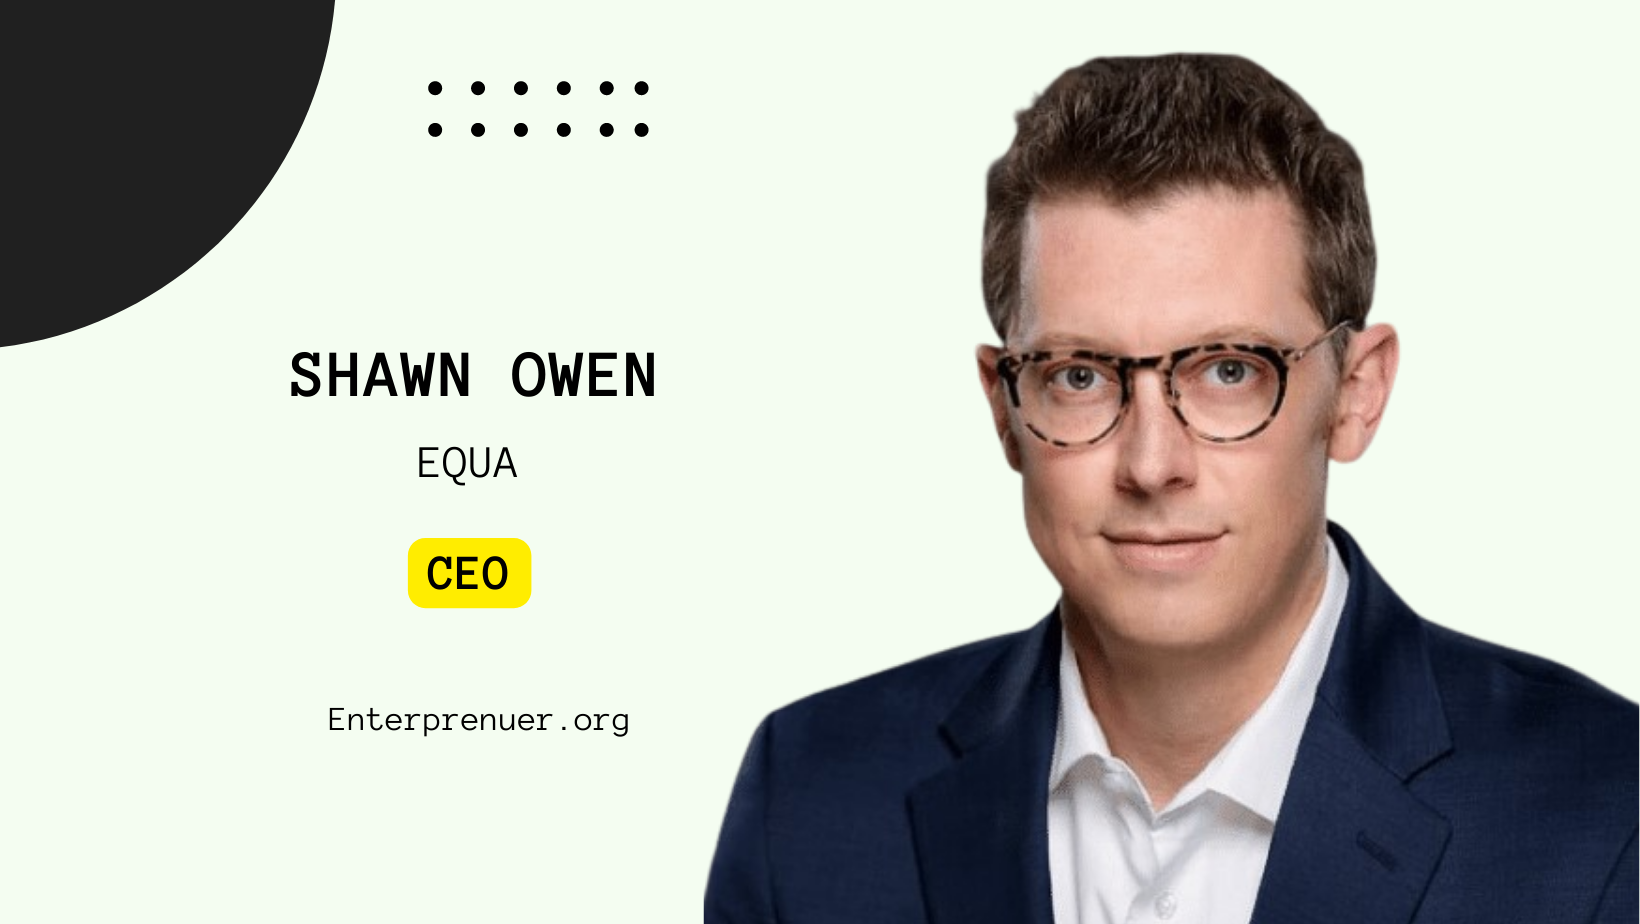 Meet Shawn Owen CEO of Equa